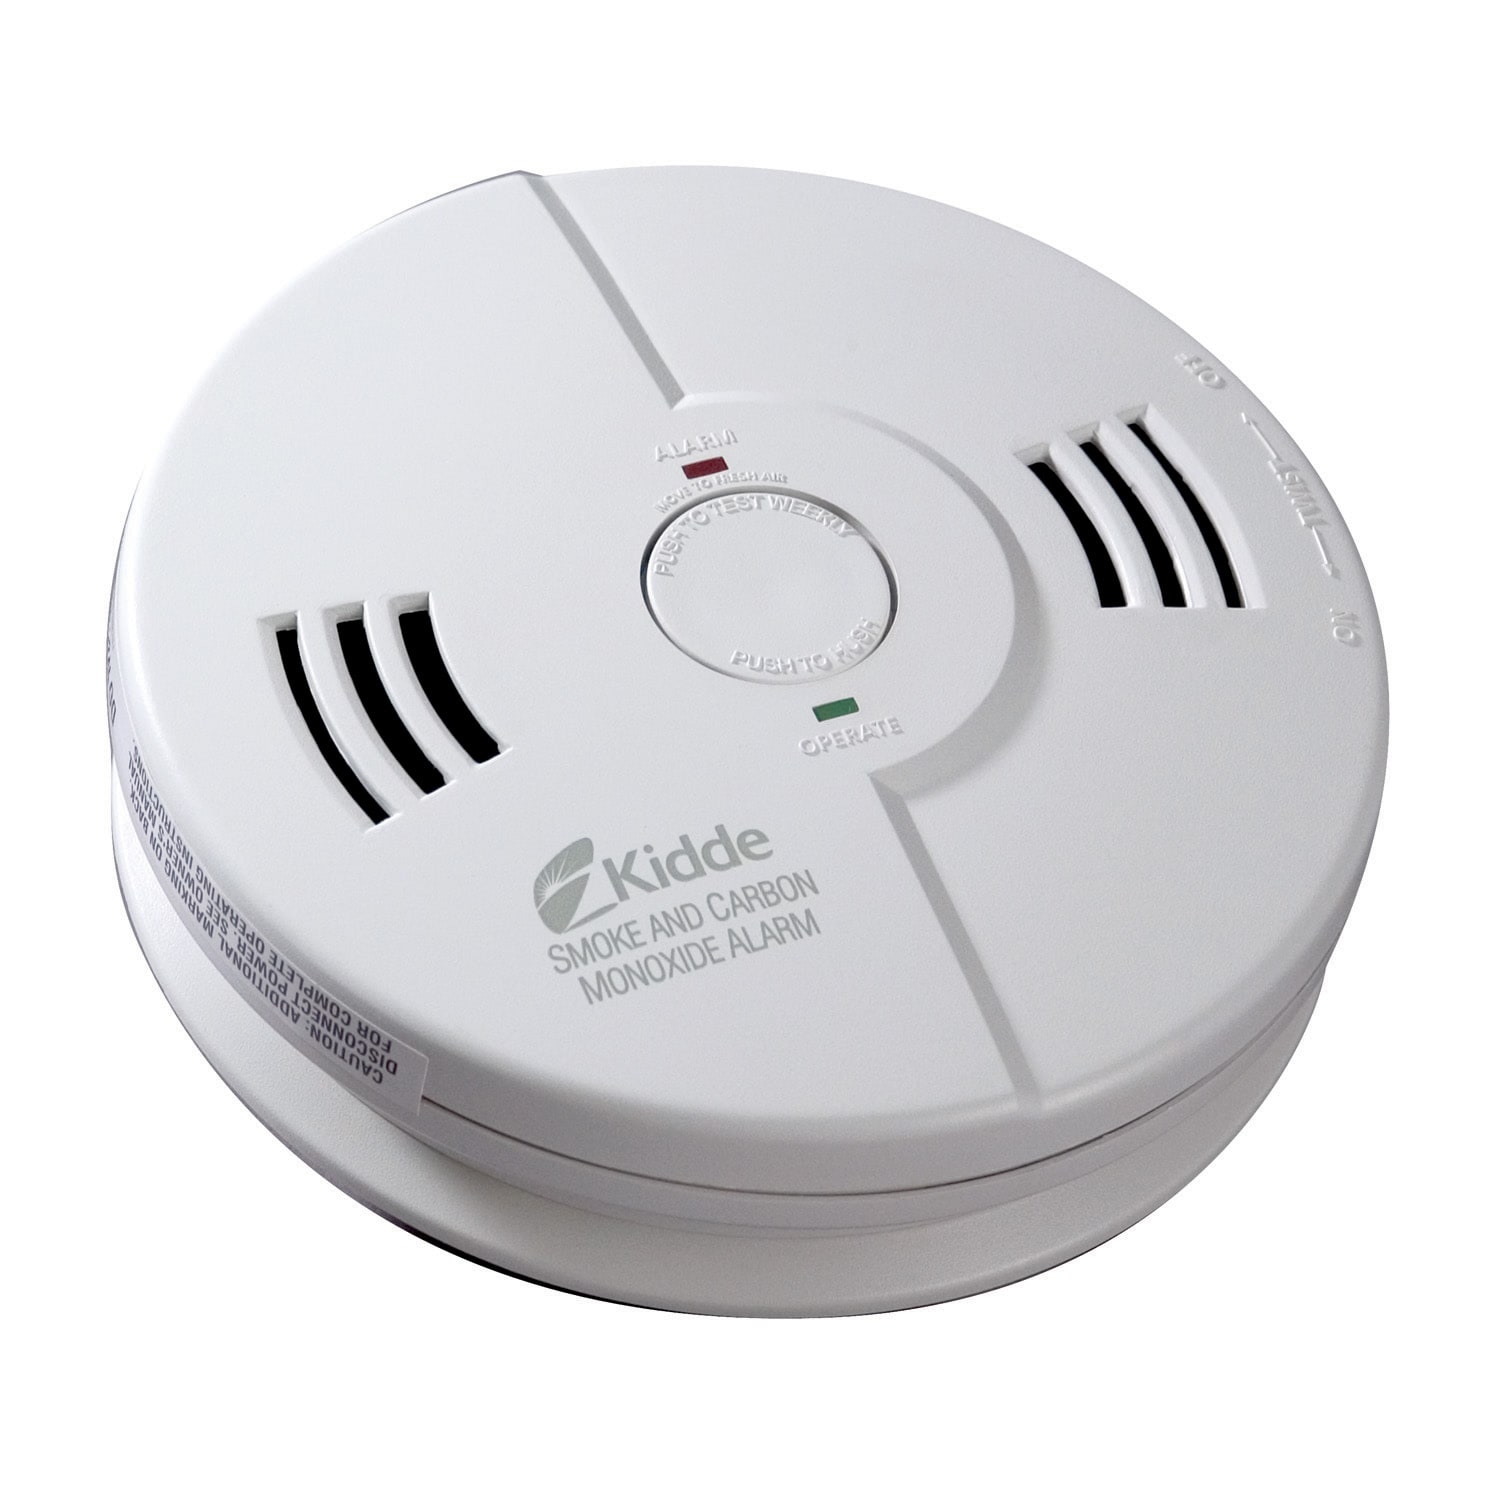 Kidde 21026043 Battery-Operated Combination Smoke/Carbon Monoxide Alarm Detector 